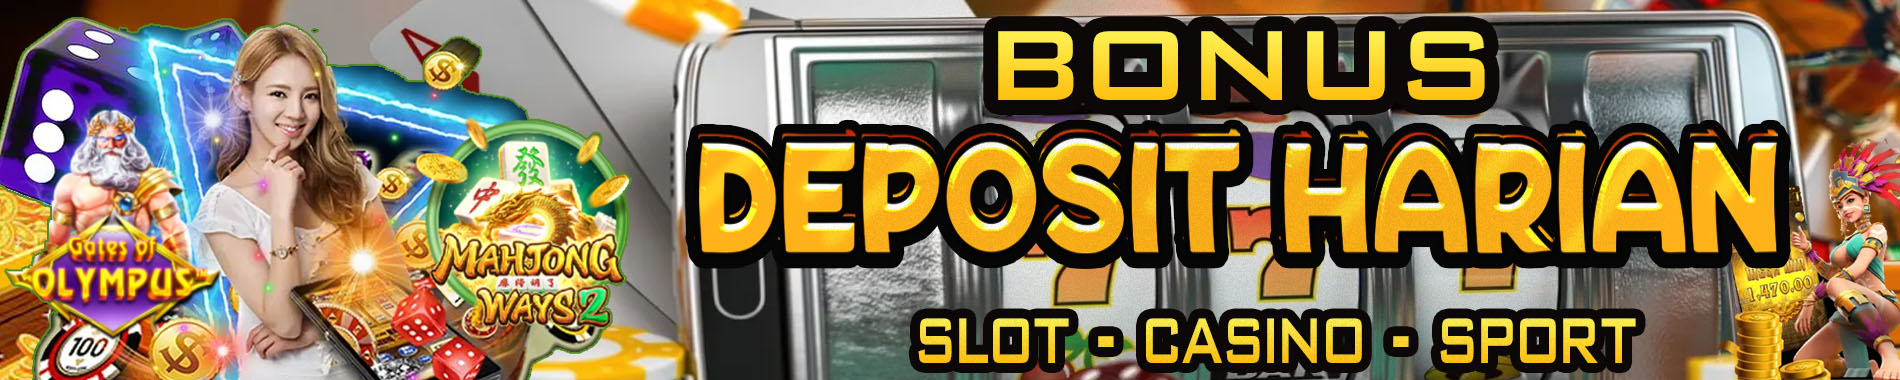 Bonus Deposit Harian Slot - Casino - Sport